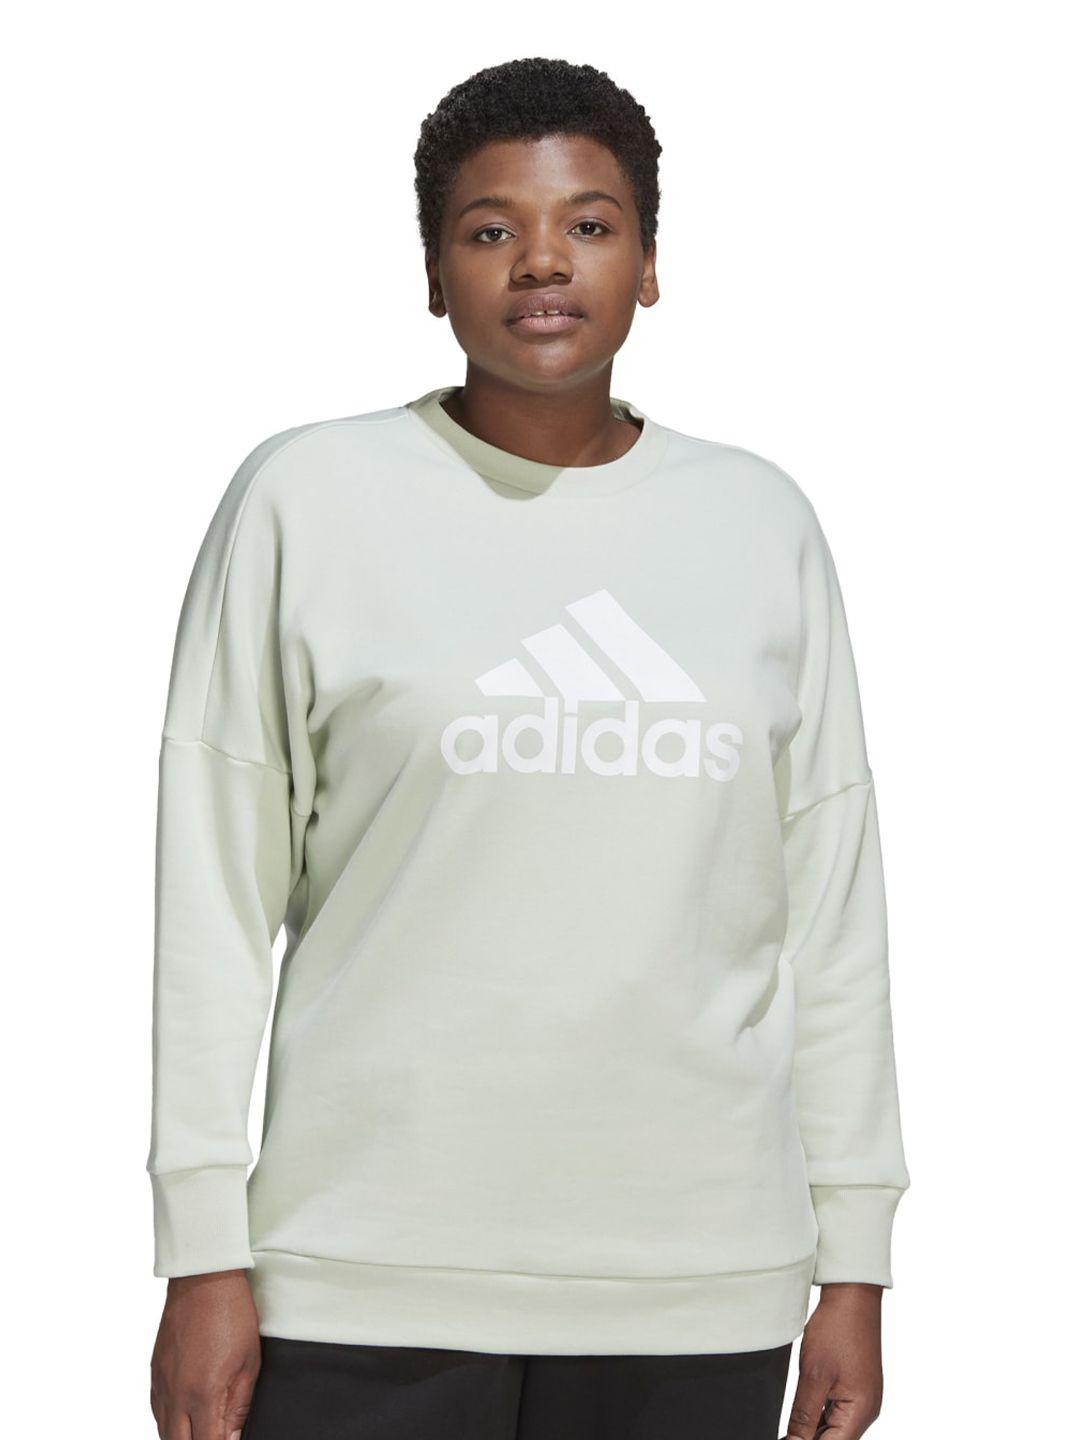 adidas w fi bos crew brand logo printed crew neck pullover pure cotton sweatshirt